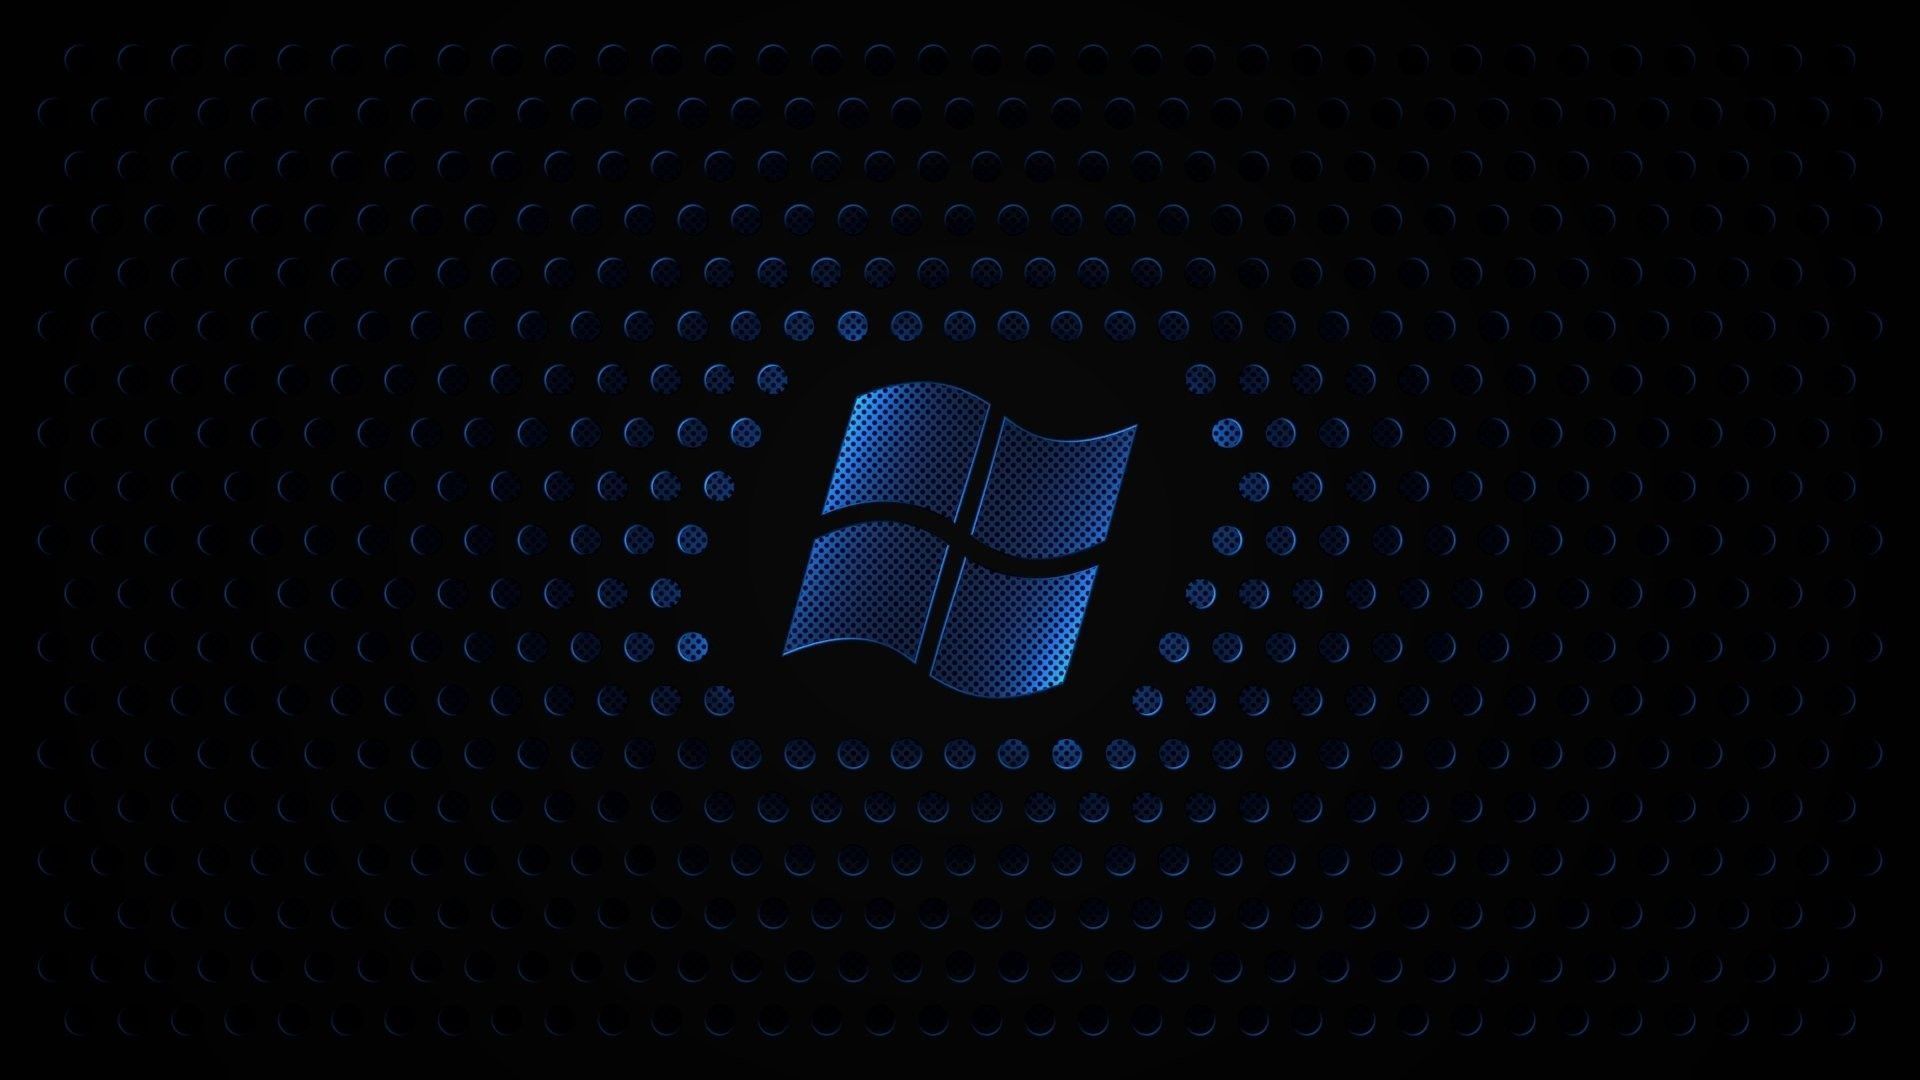 hd wallpaper Windows Xp Microsoft Logos   Background Wallpapers for